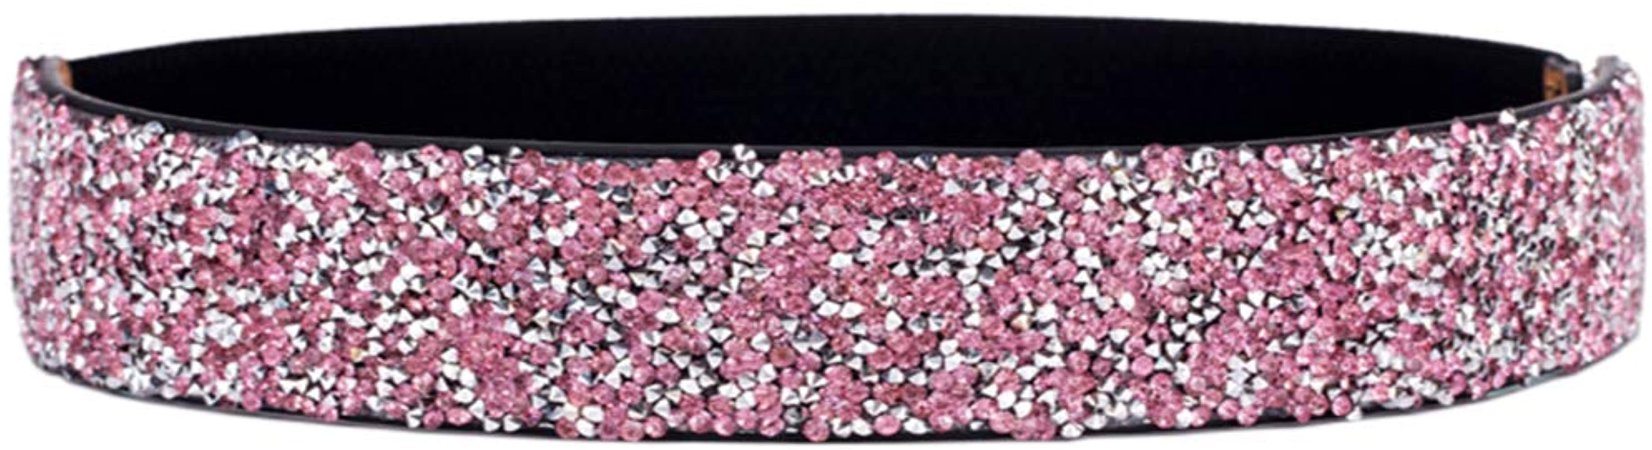 ALAIX Women's Stretchy Dress Belts Sparkle Bling Rhinestone Shiny Party Belt Elastic Waist Belt Pink at Amazon Women’s Clothing store